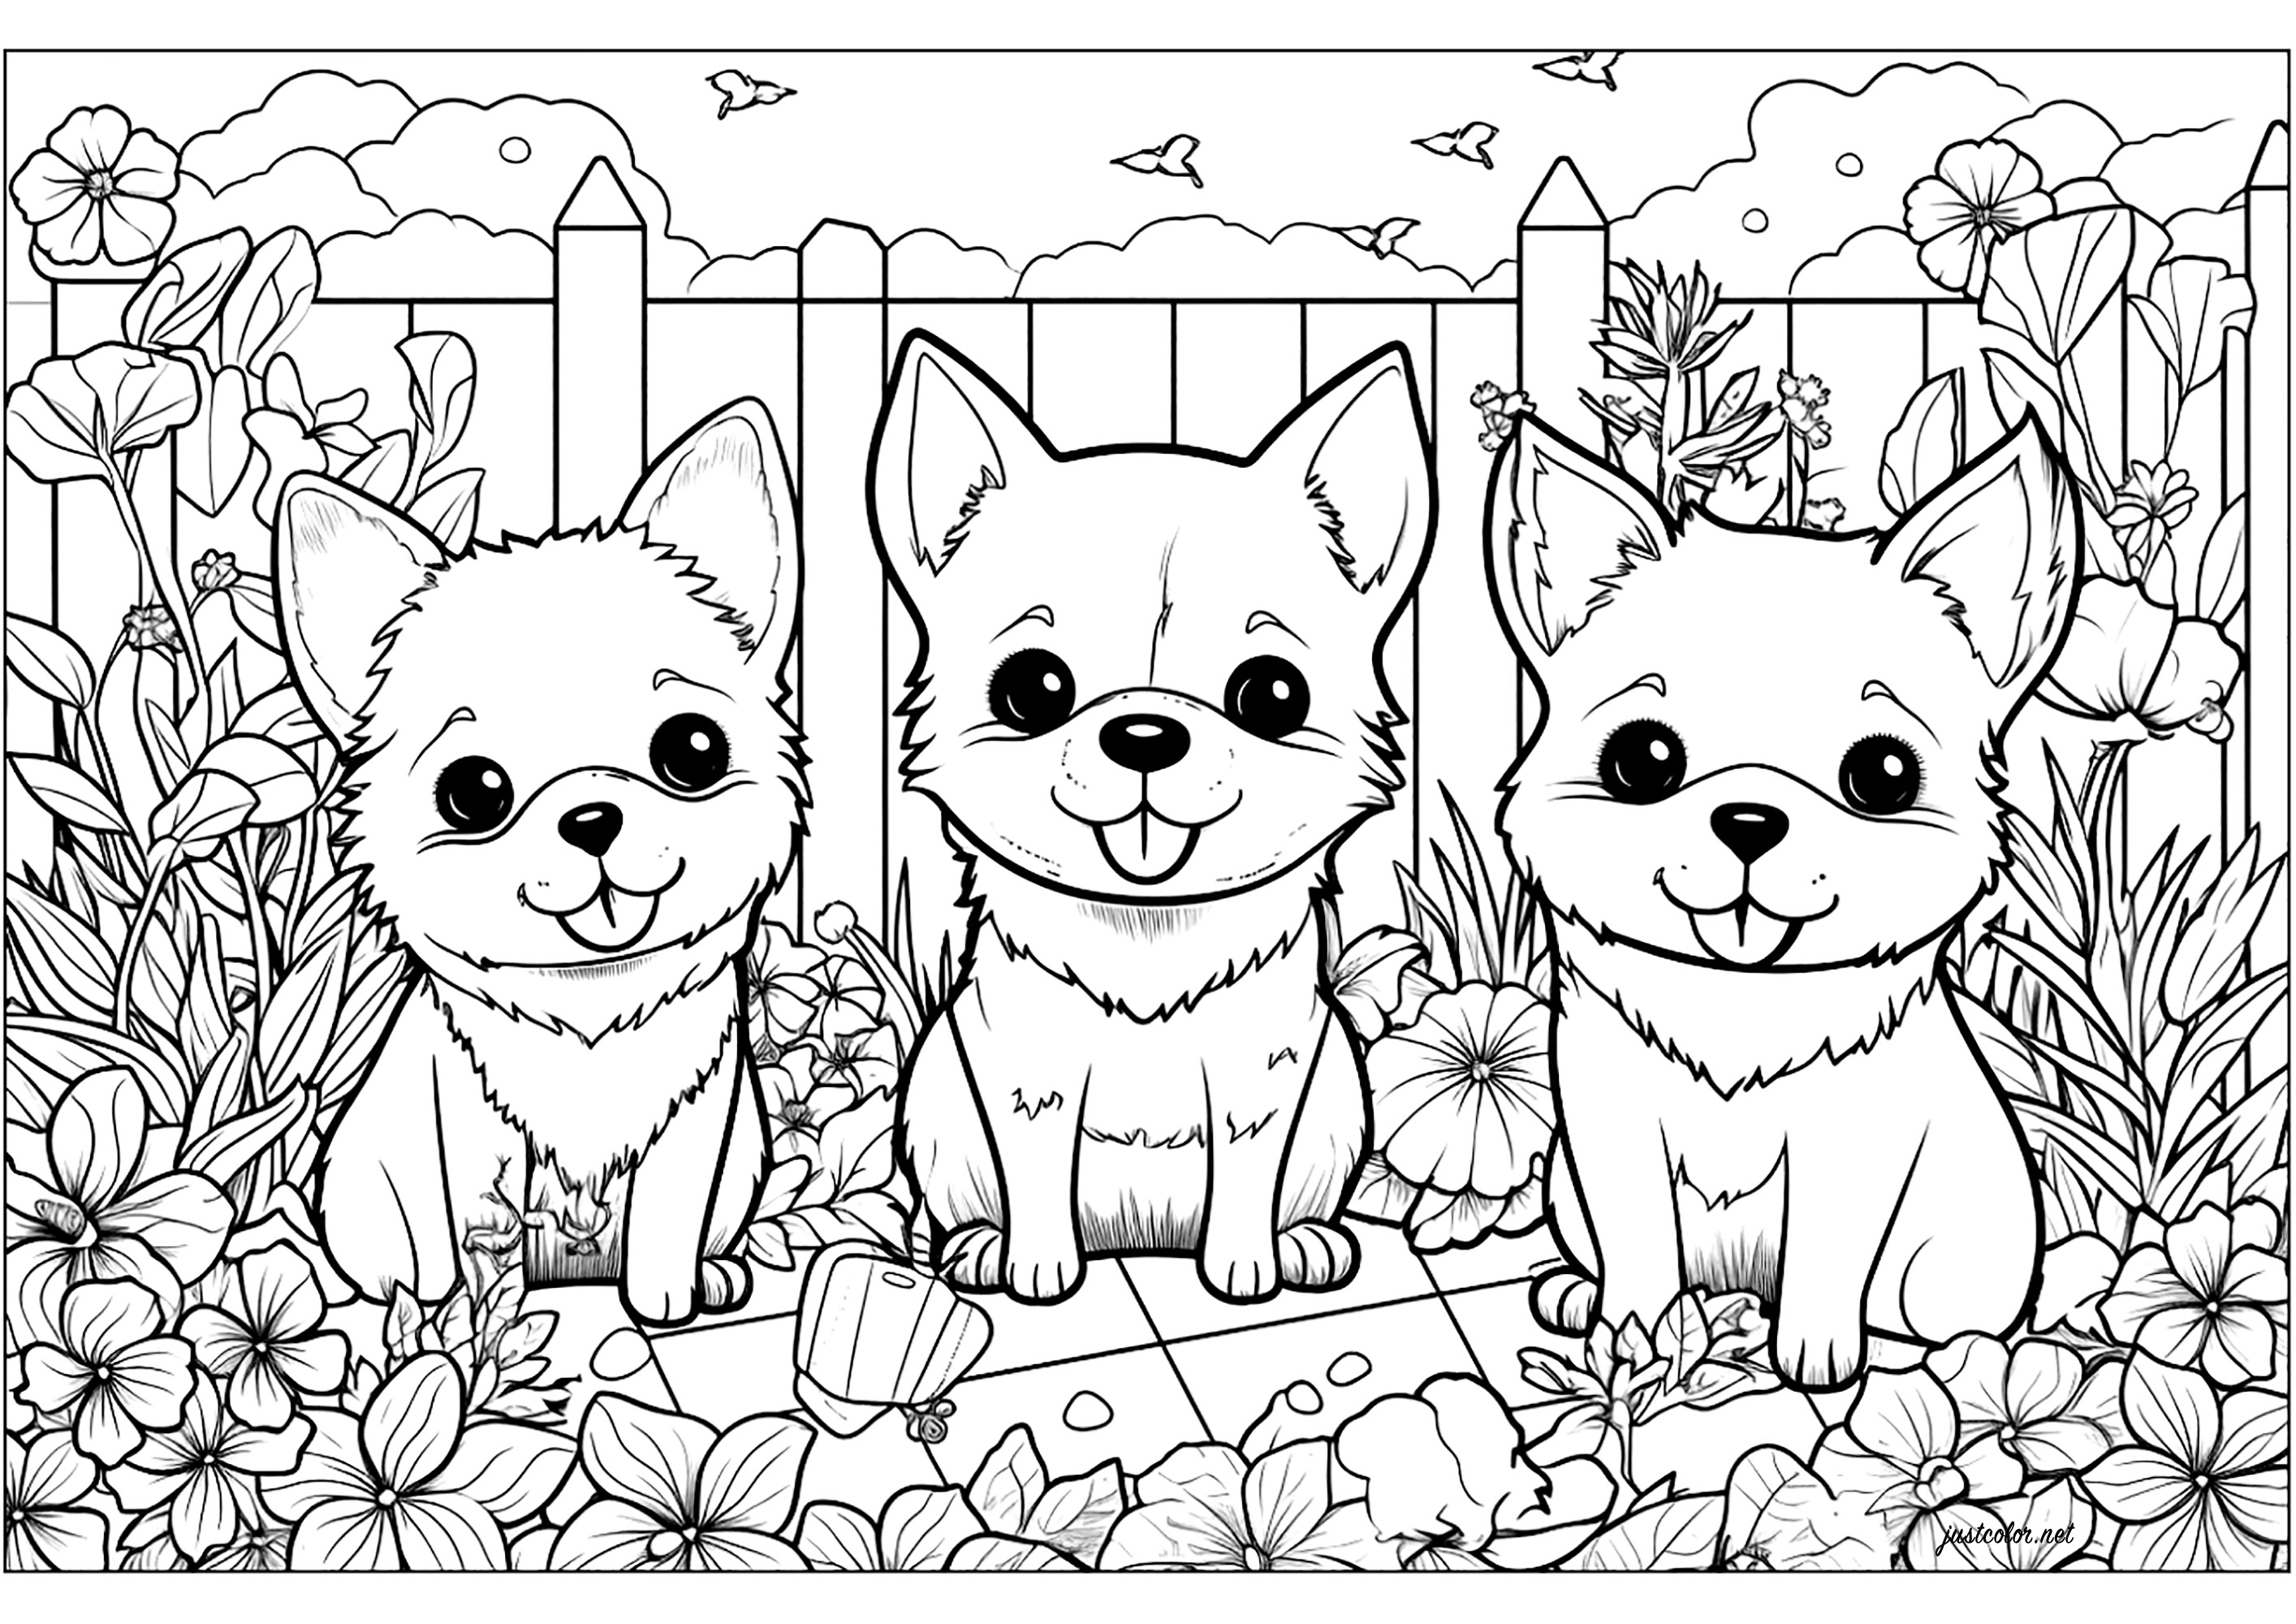 Tres simpáticos cachorros rodeados de flores